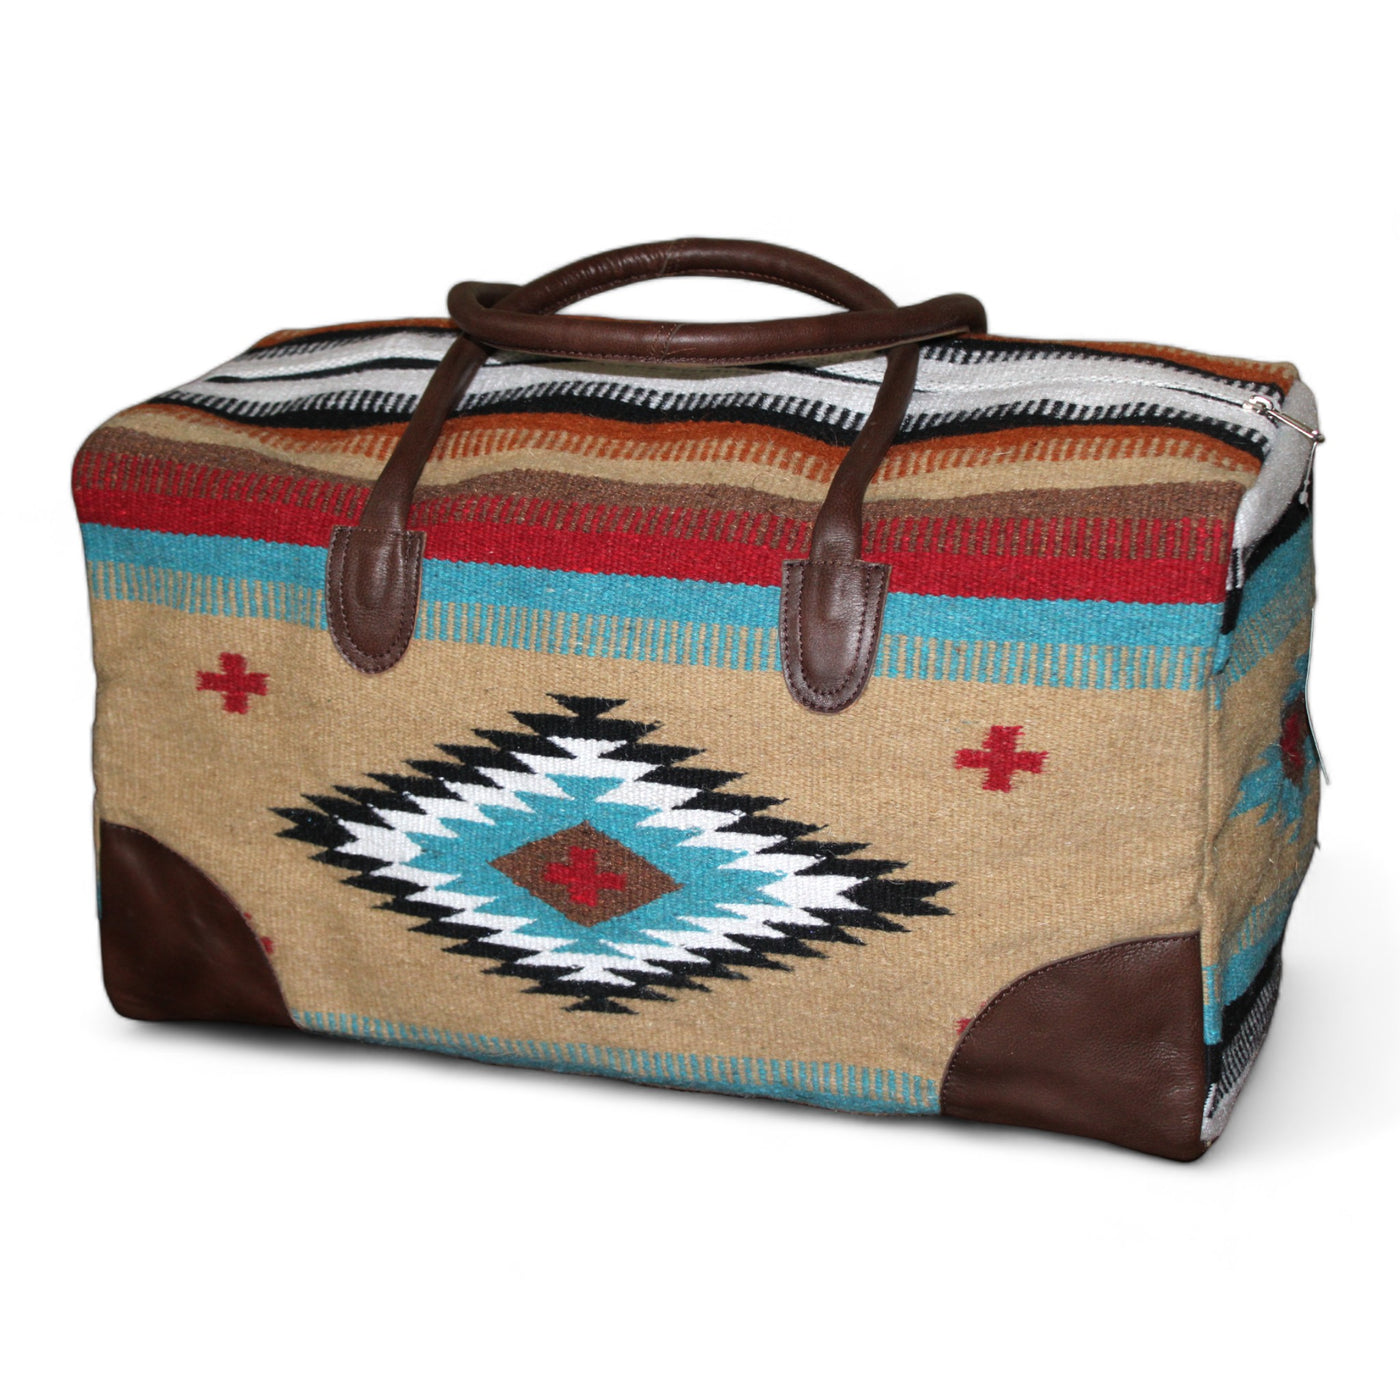 Aztec Large Weekender Southwestern Duffel Bag Cayman Saddle Blanket Bag 100% Leather Handles